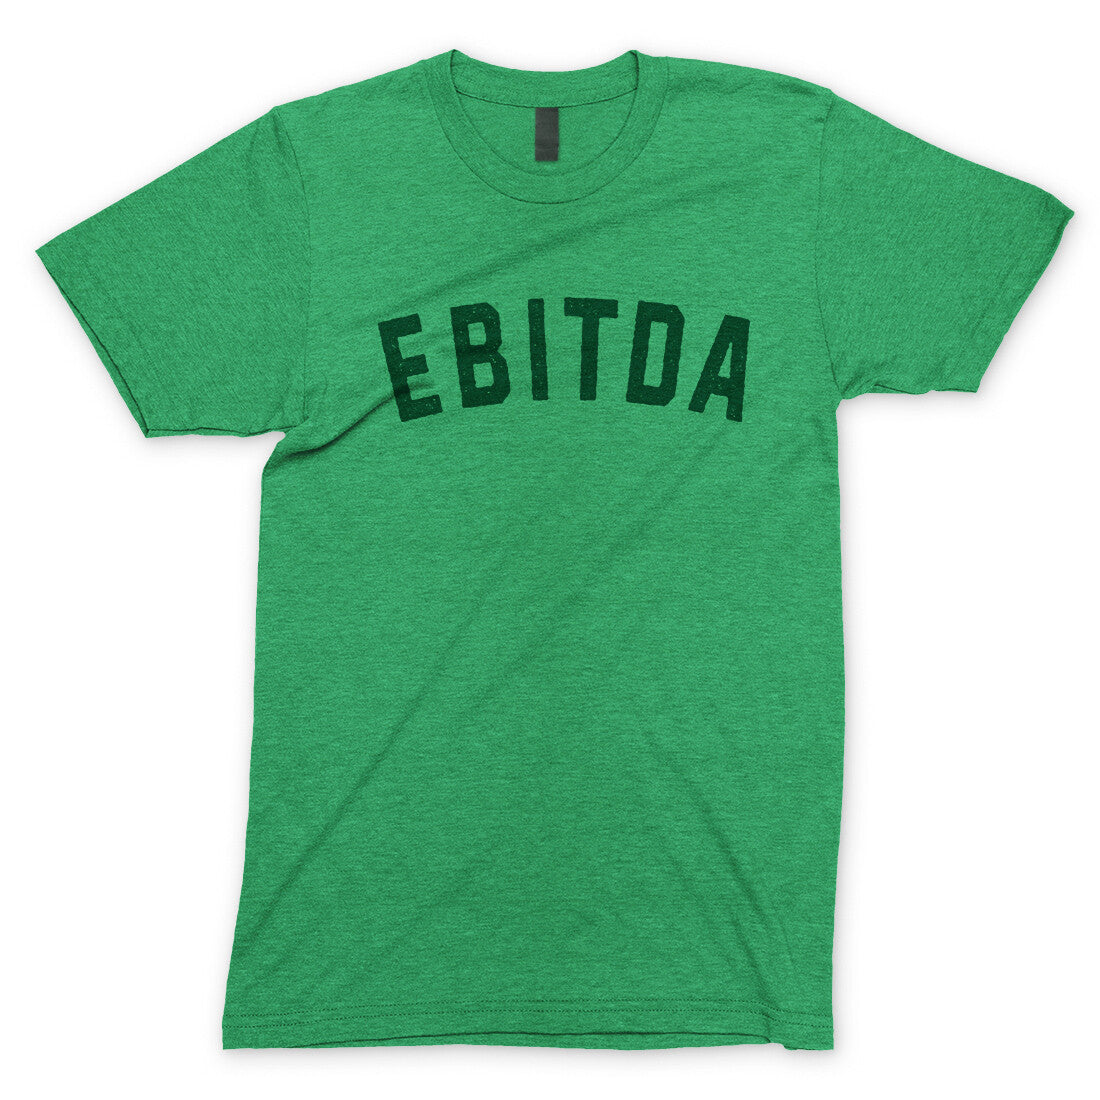 EBITDA in Heather Irish Green Color